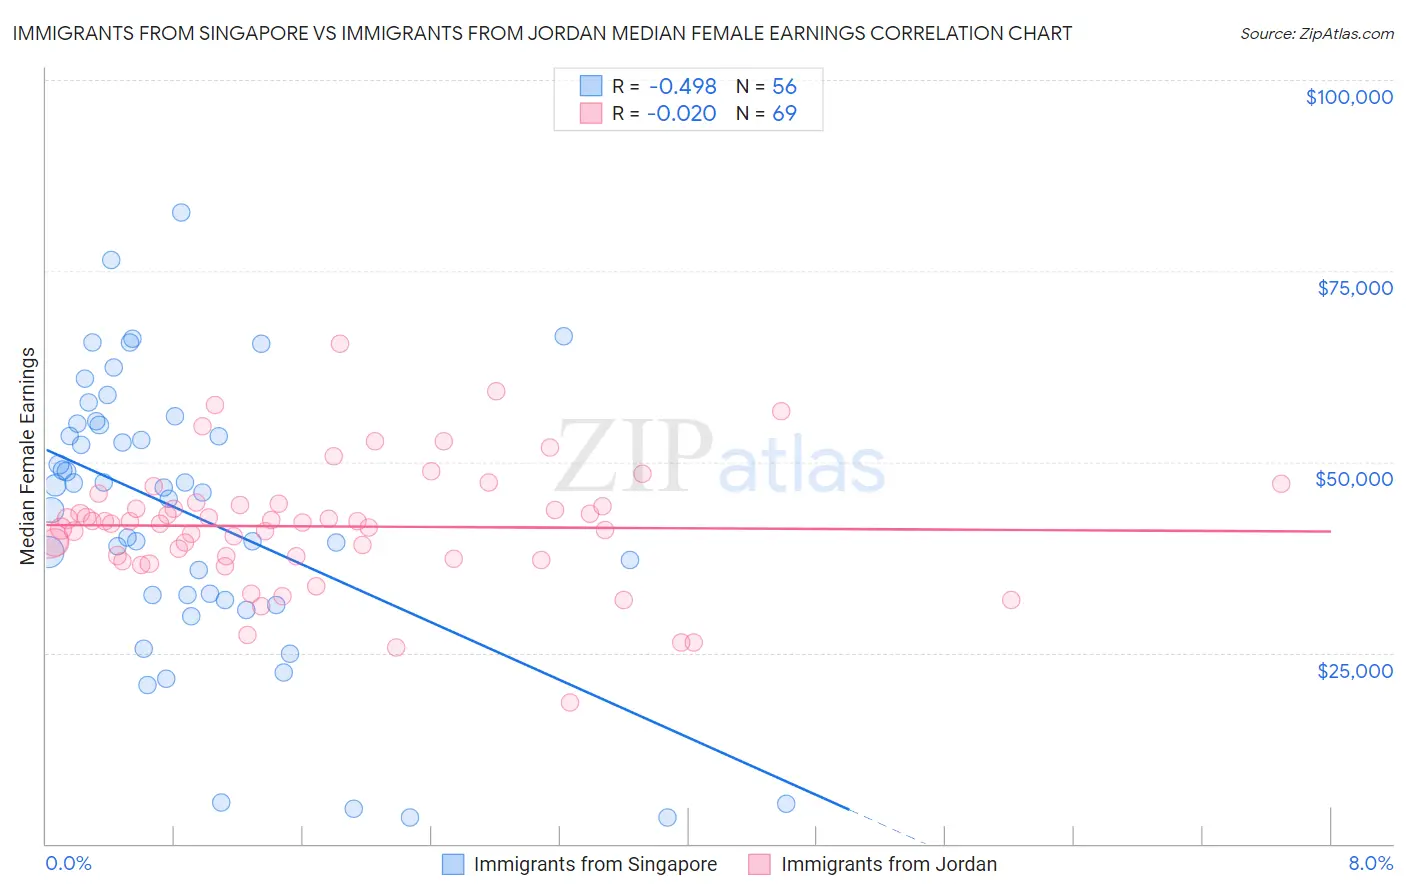 Immigrants from Singapore vs Immigrants from Jordan Median Female Earnings